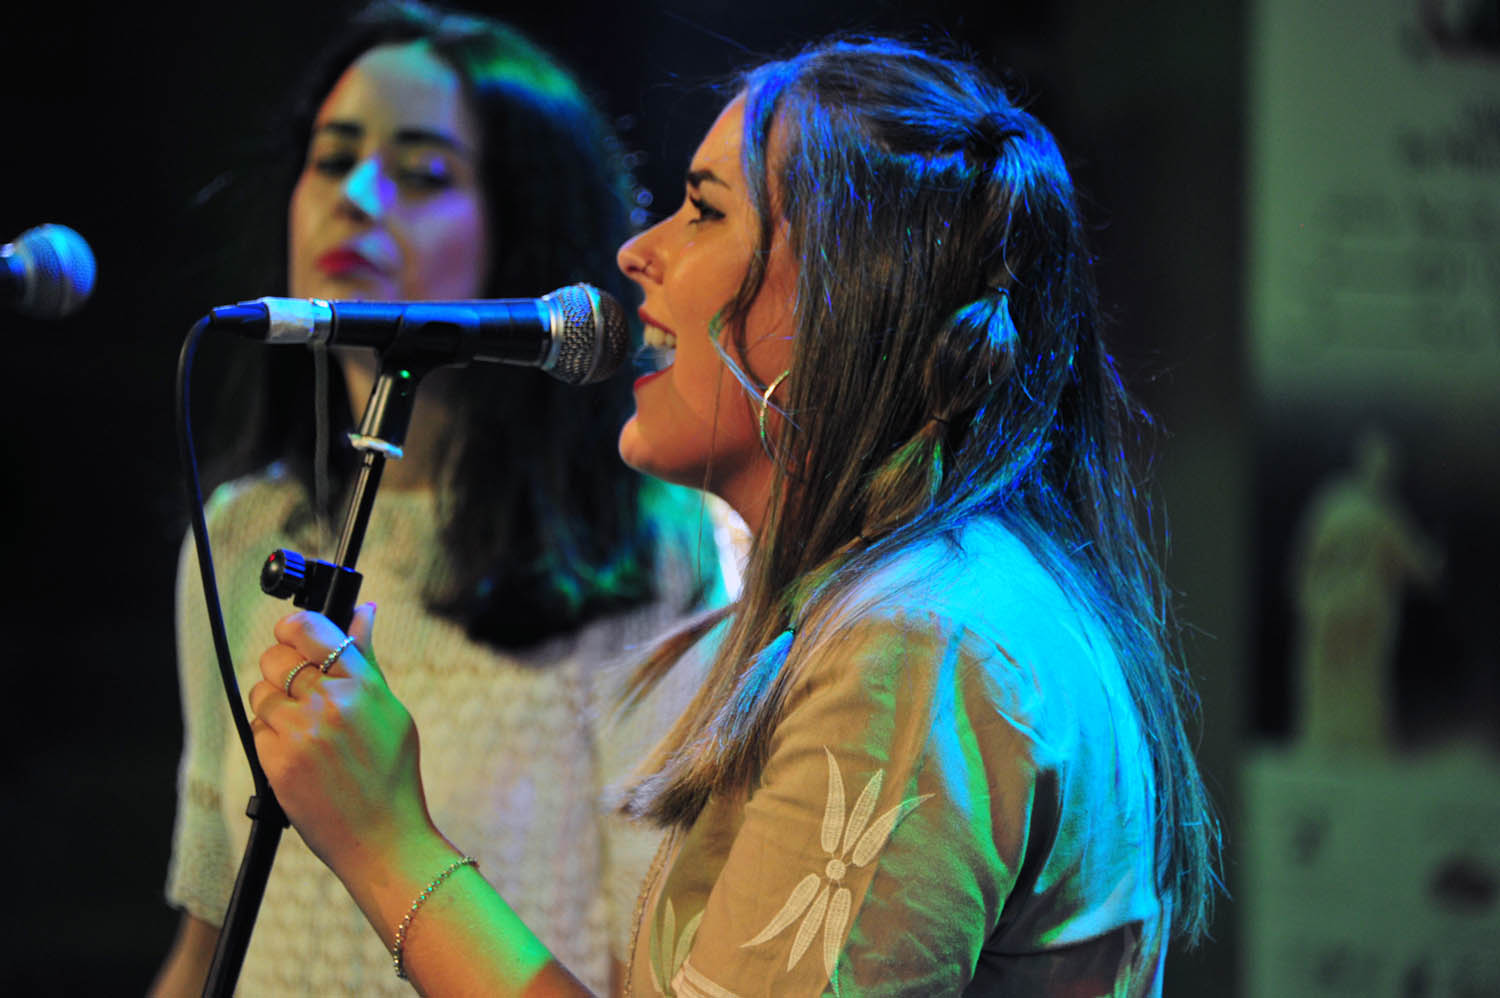 The Neo-folk Galician music relies on women's chants